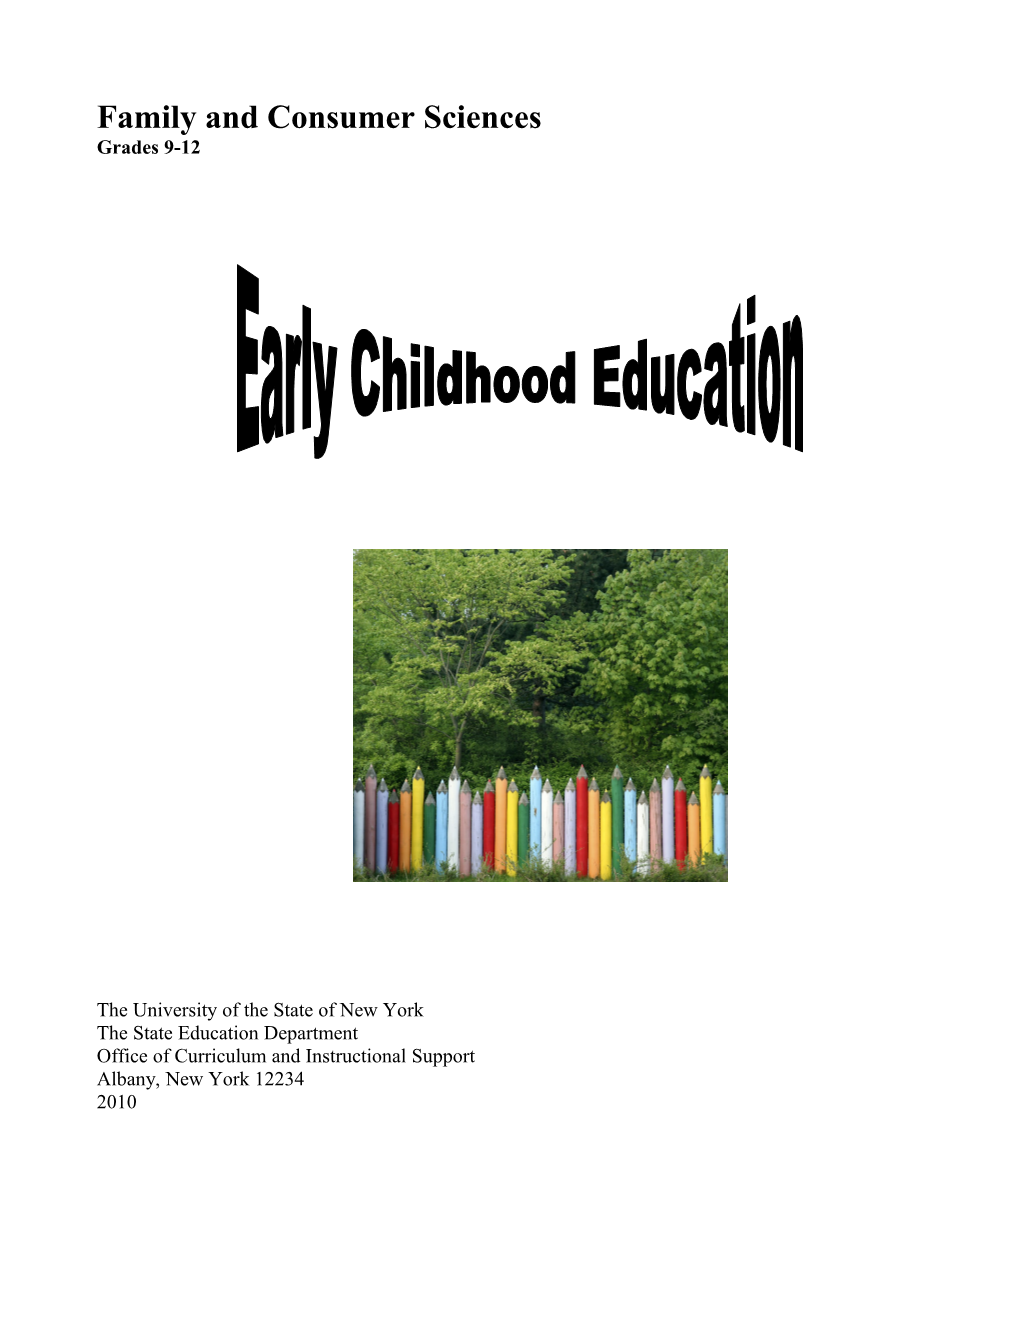 Early Childhood Education Programs